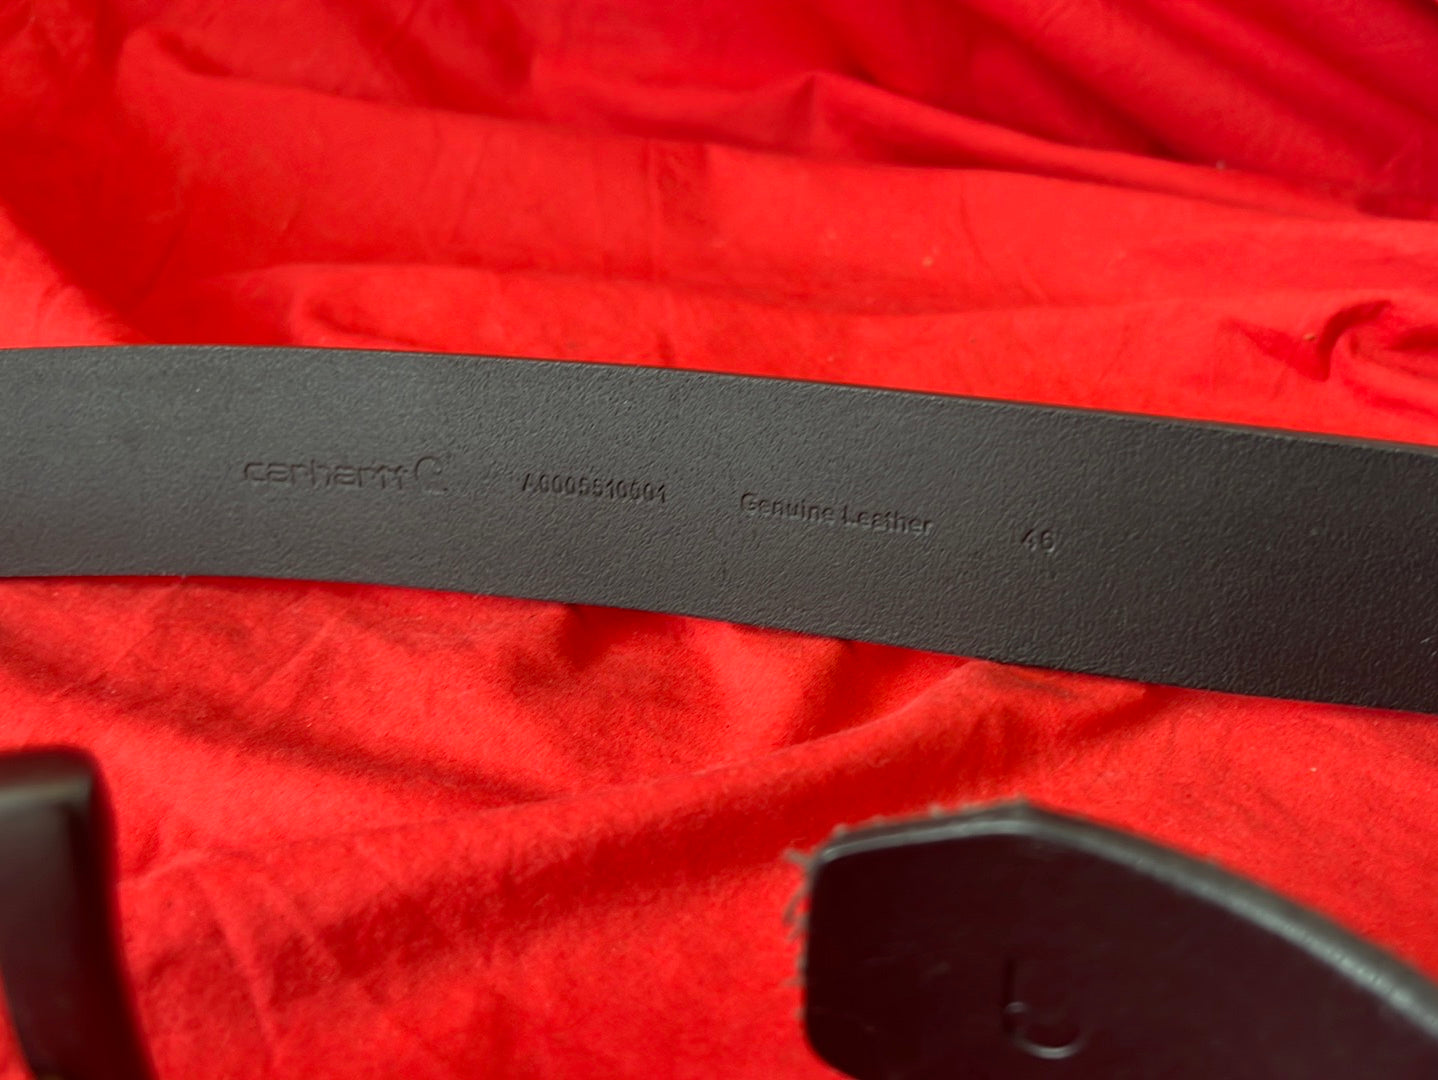 CARHARTT -- Anvil Black Leather Belt -- Size 46